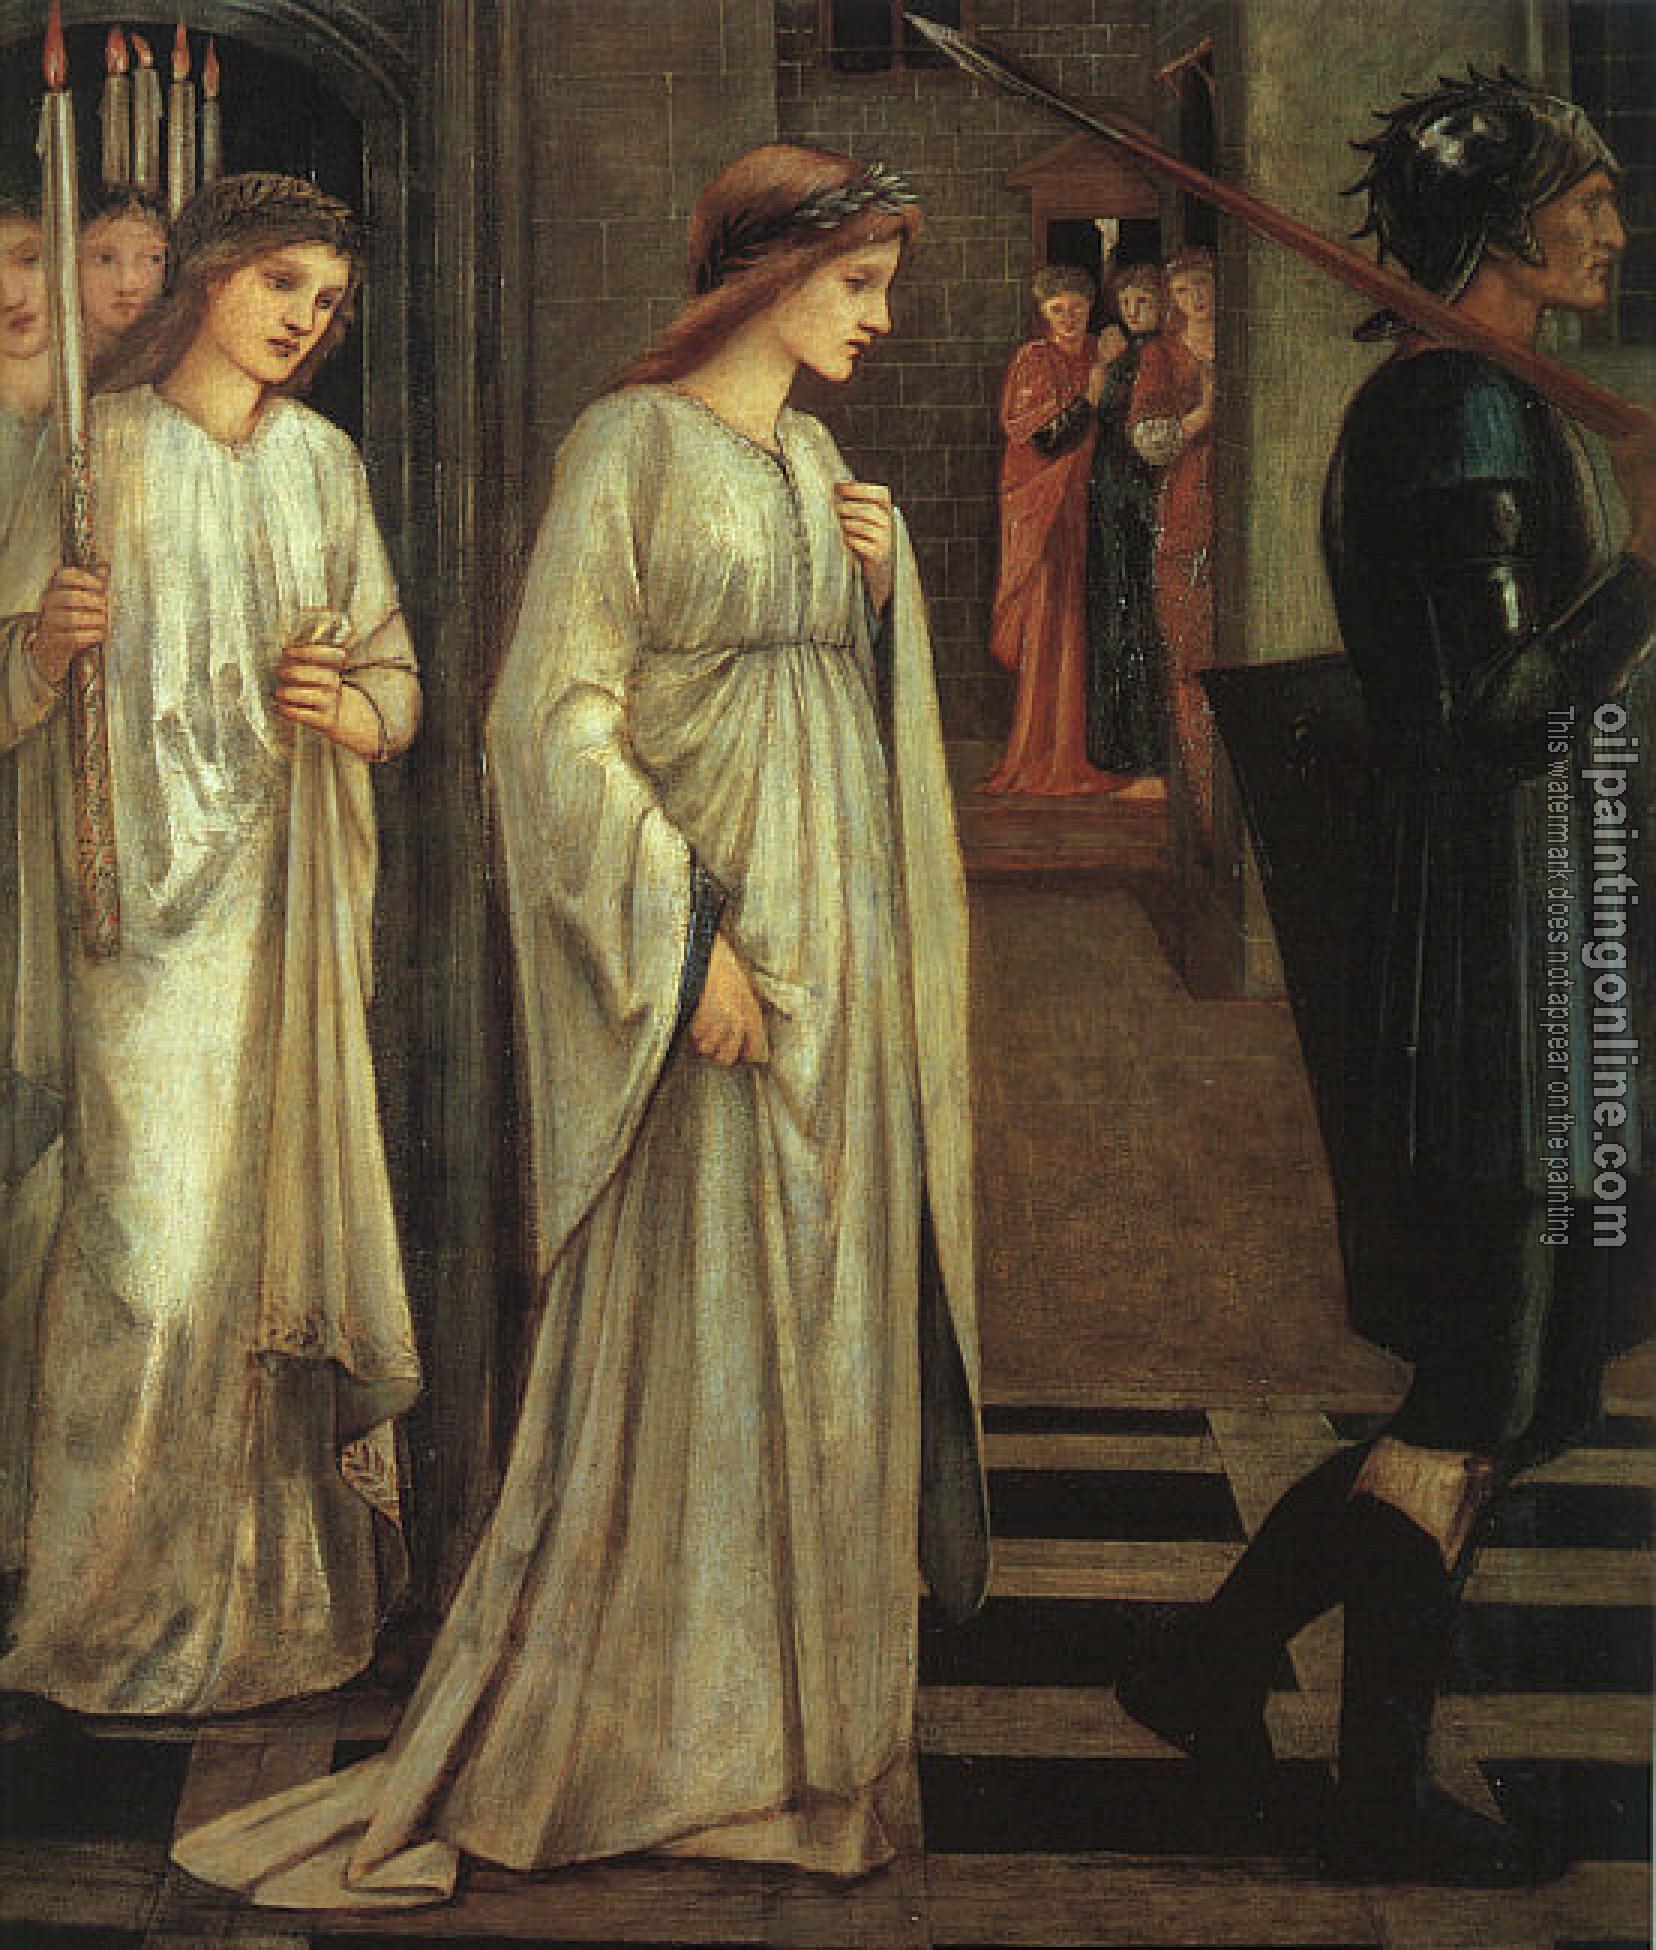 Burne-Jones, Sir Edward Coley - The Princess Sabra Led to the Dragon